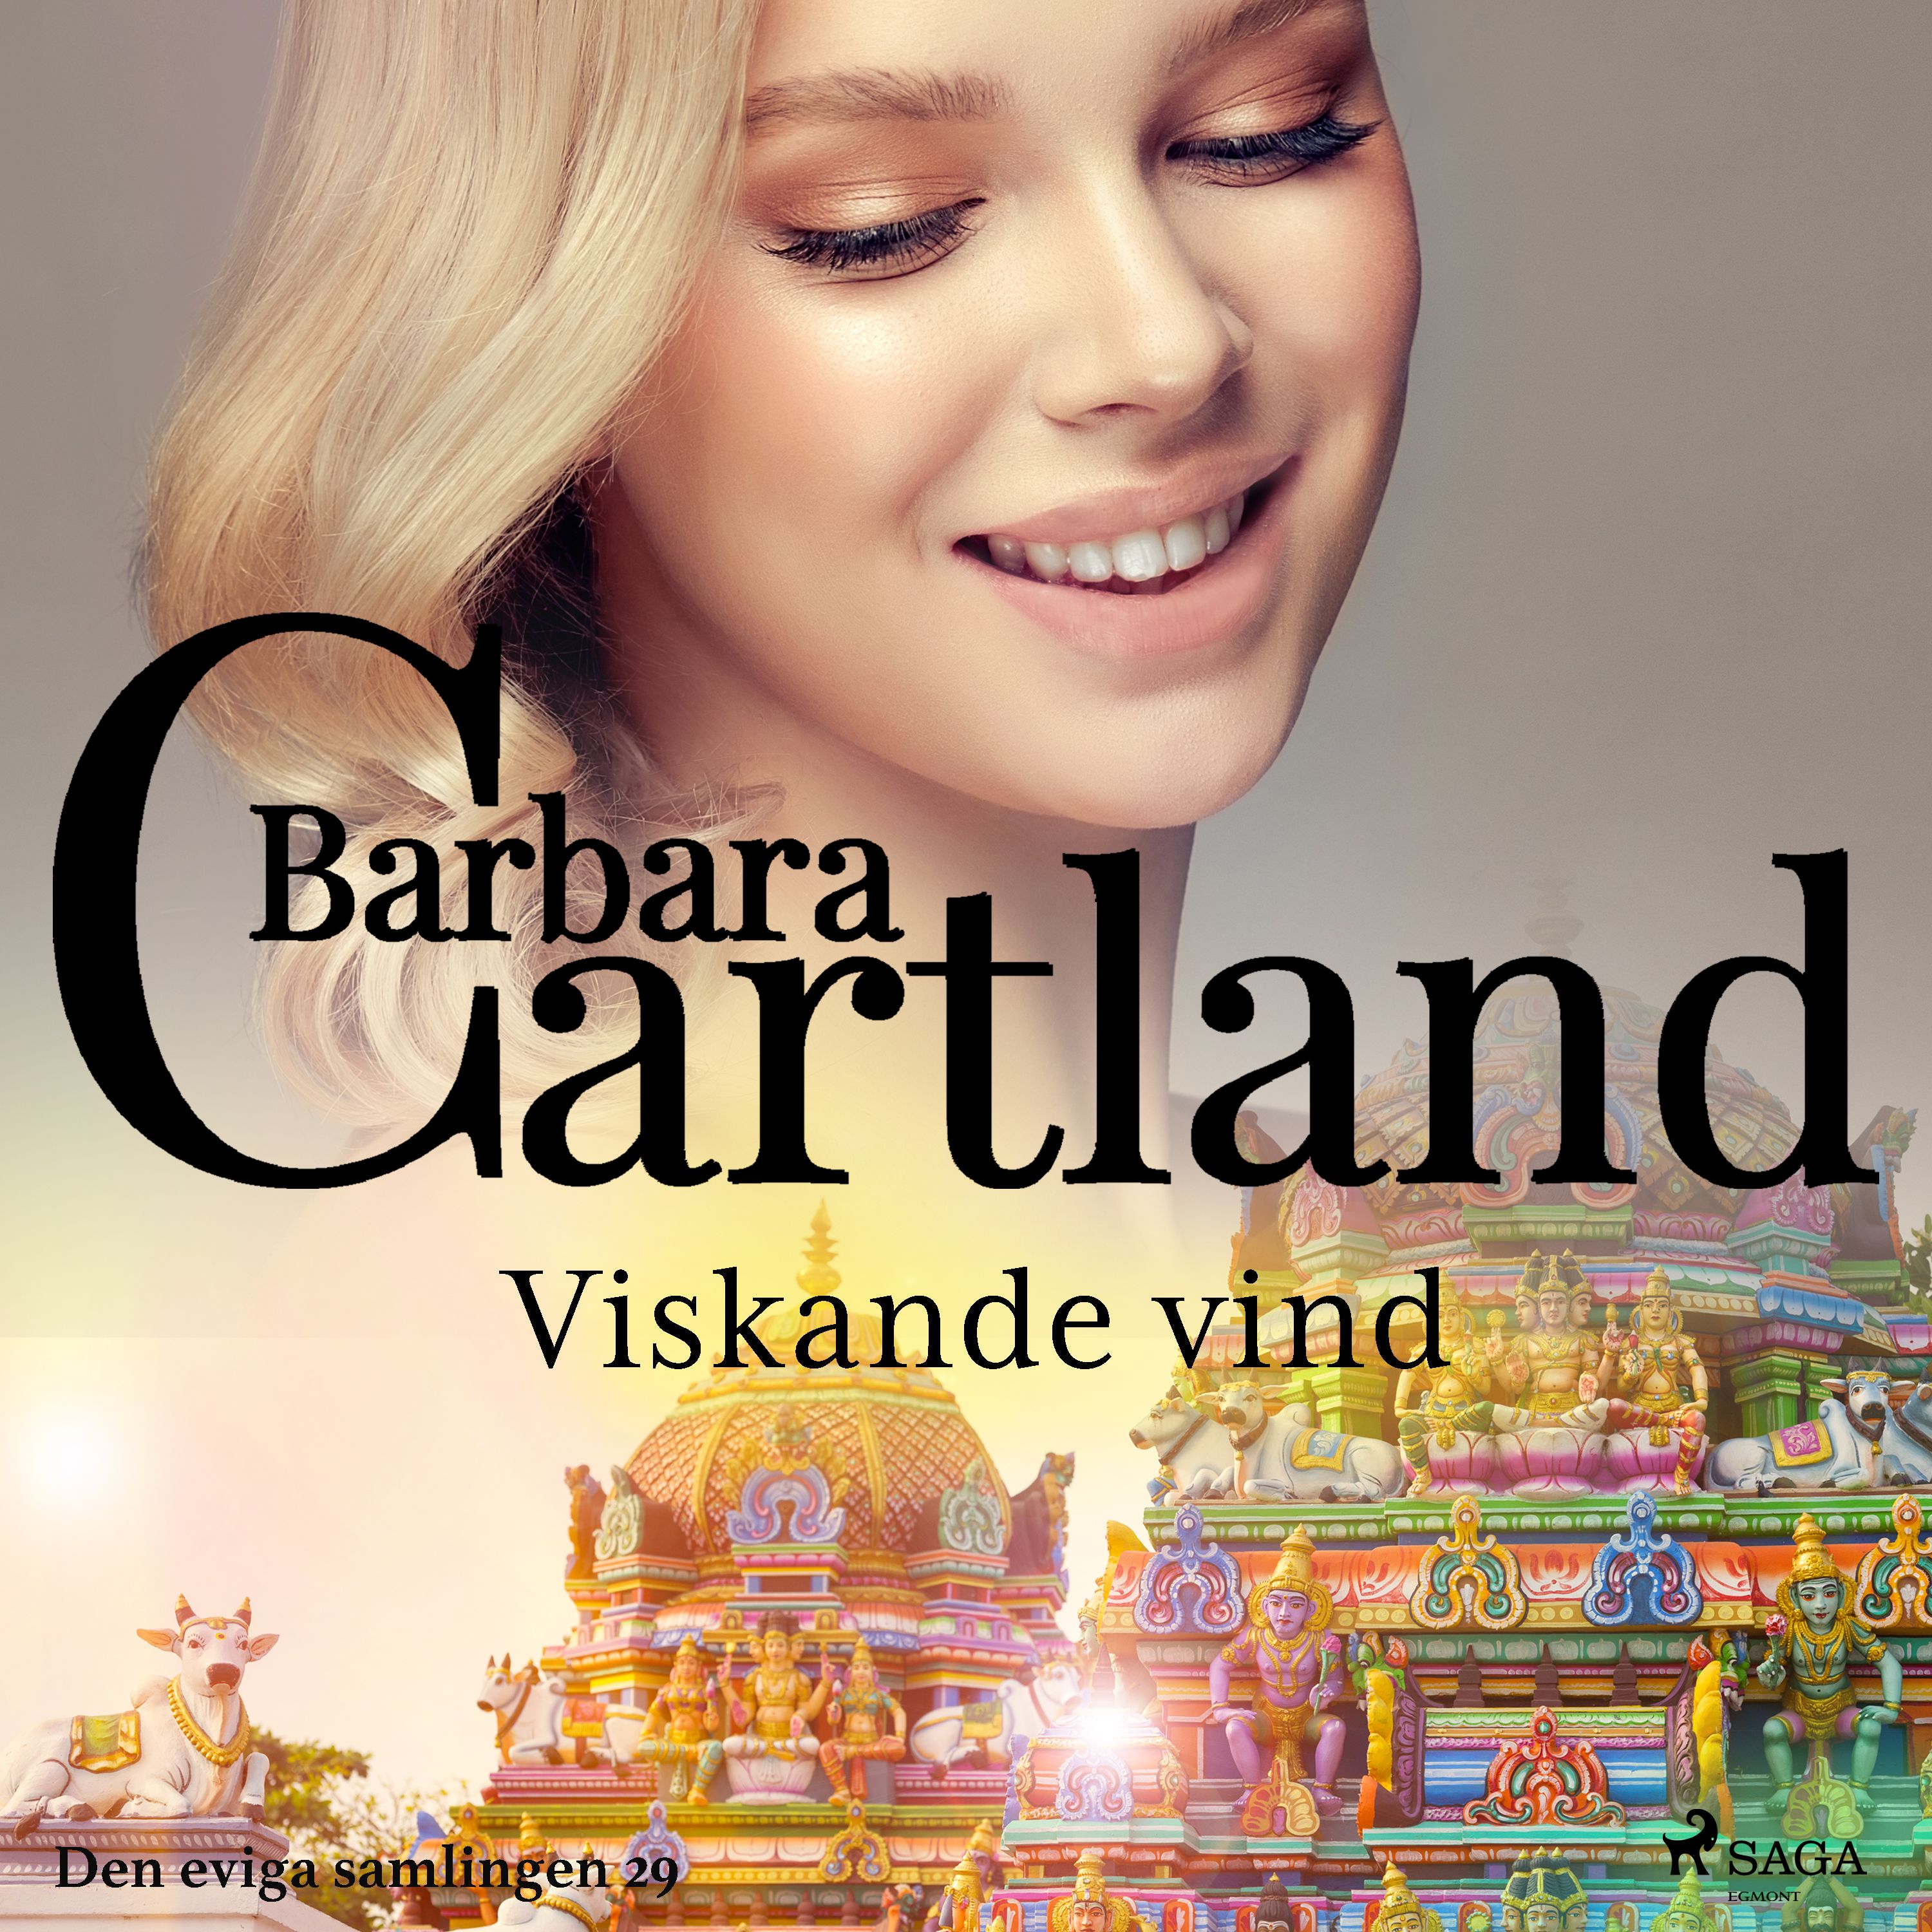 Viskande vind, audiobook by Barbara Cartland